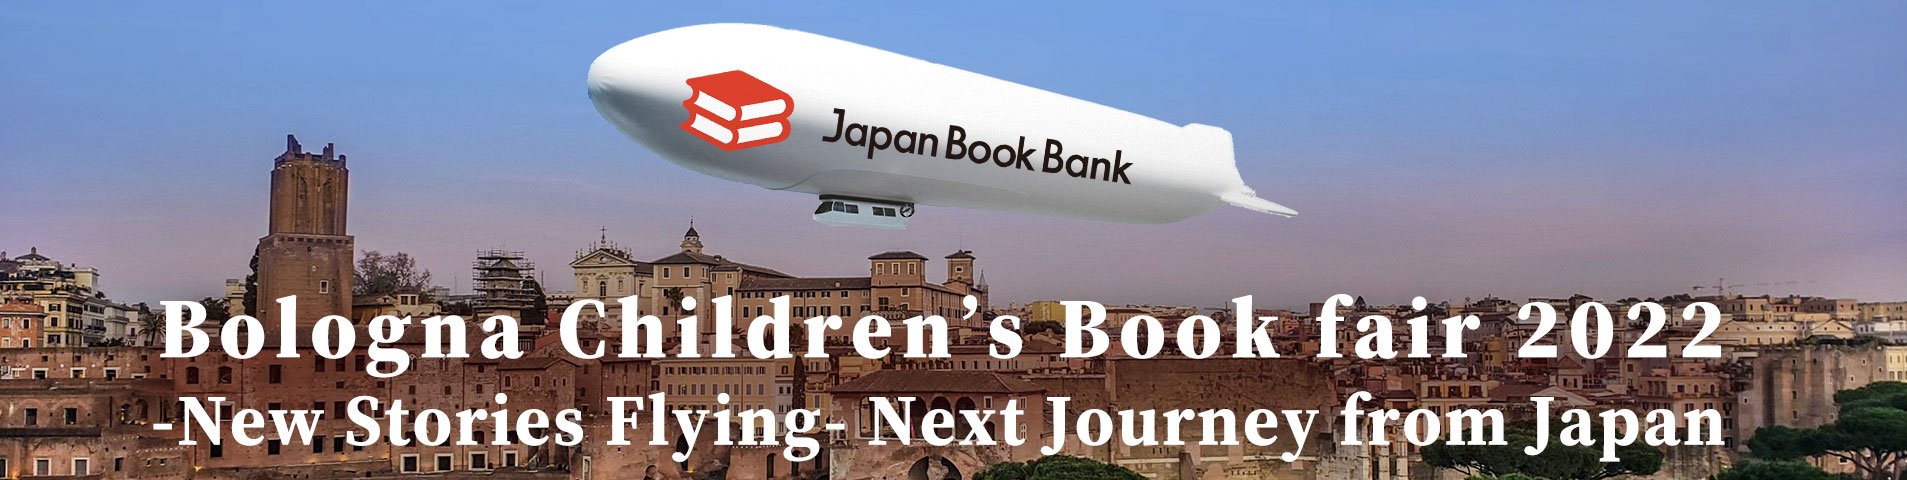 Bologna Children’s Book fair 2022
-New Stories Flying- Next Journey from Japan